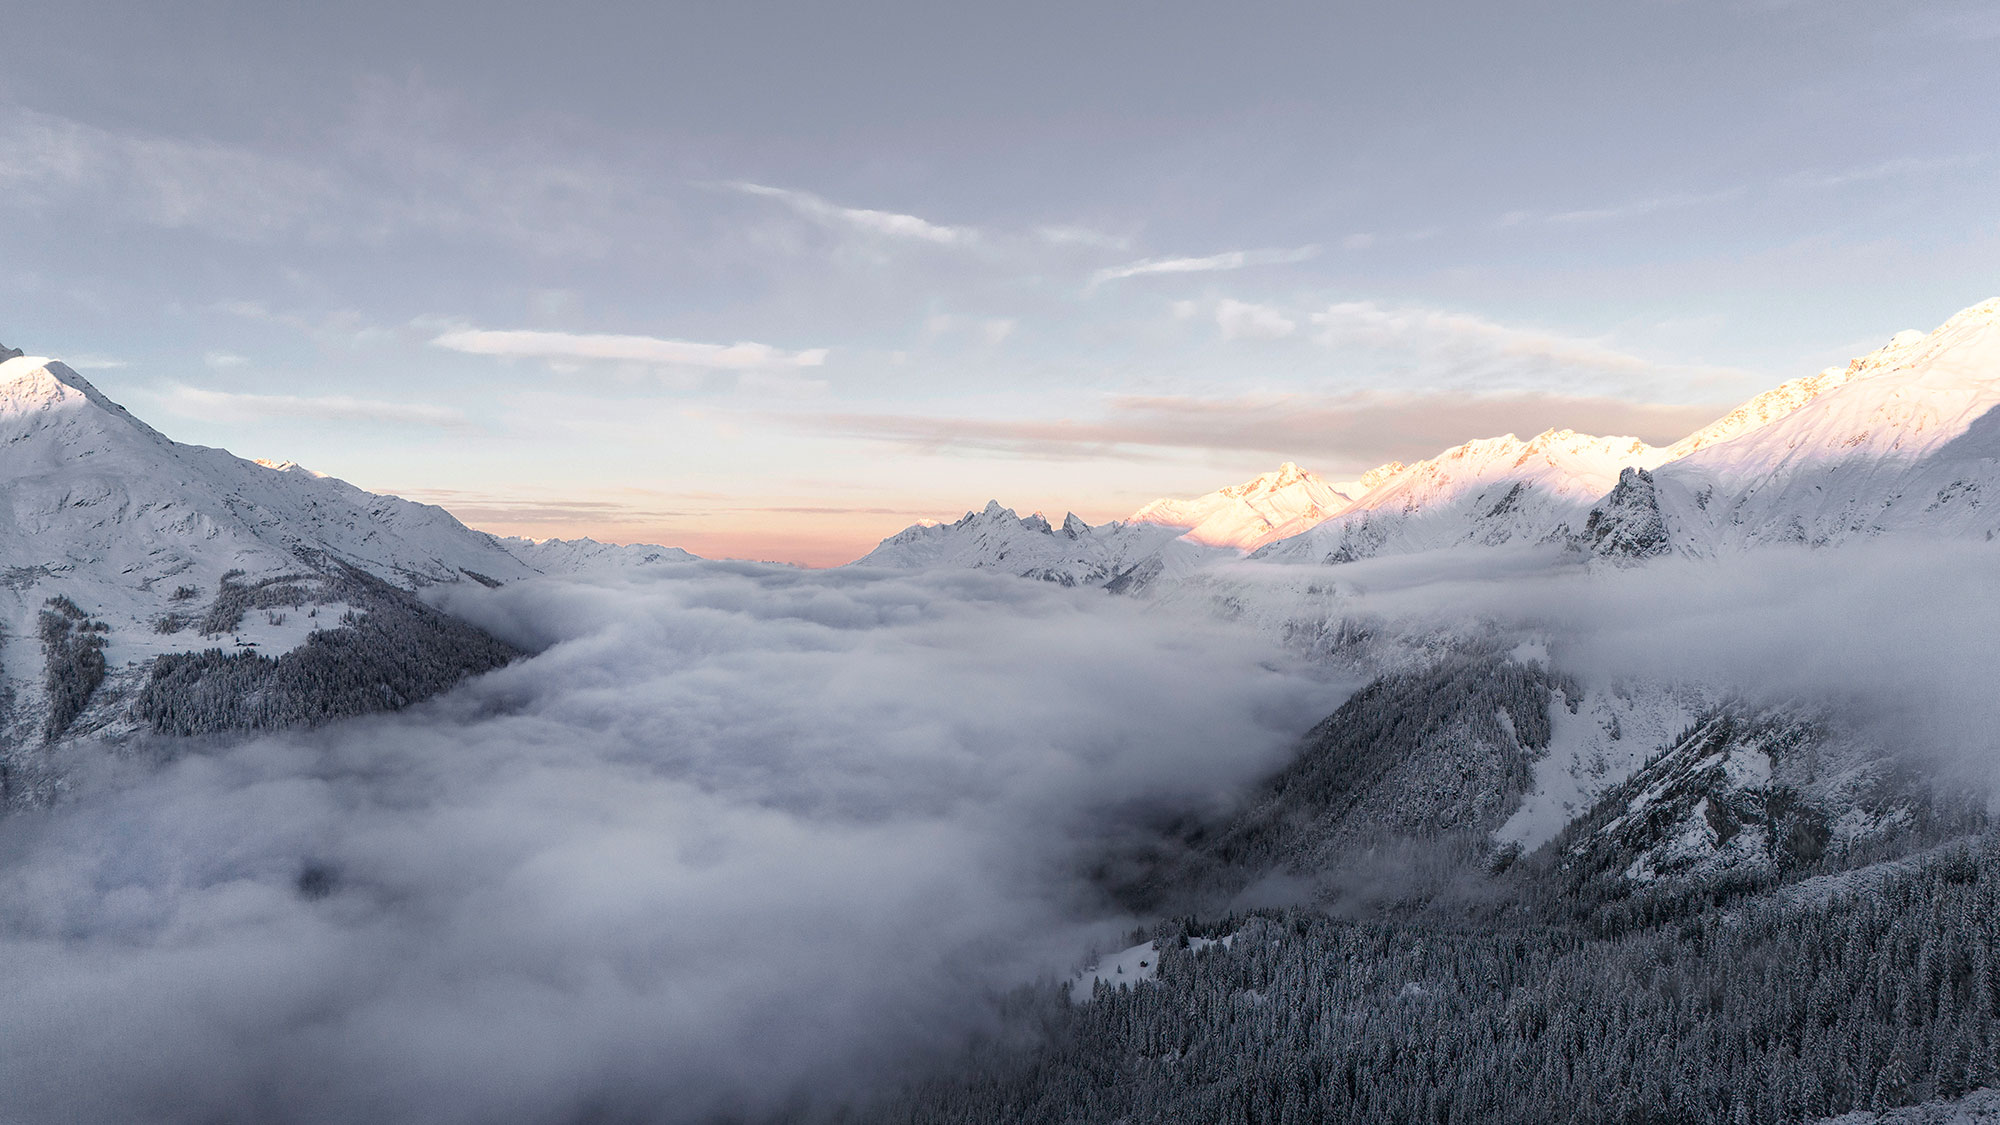 Omaela Story: Winter anticipation on the Arlberg